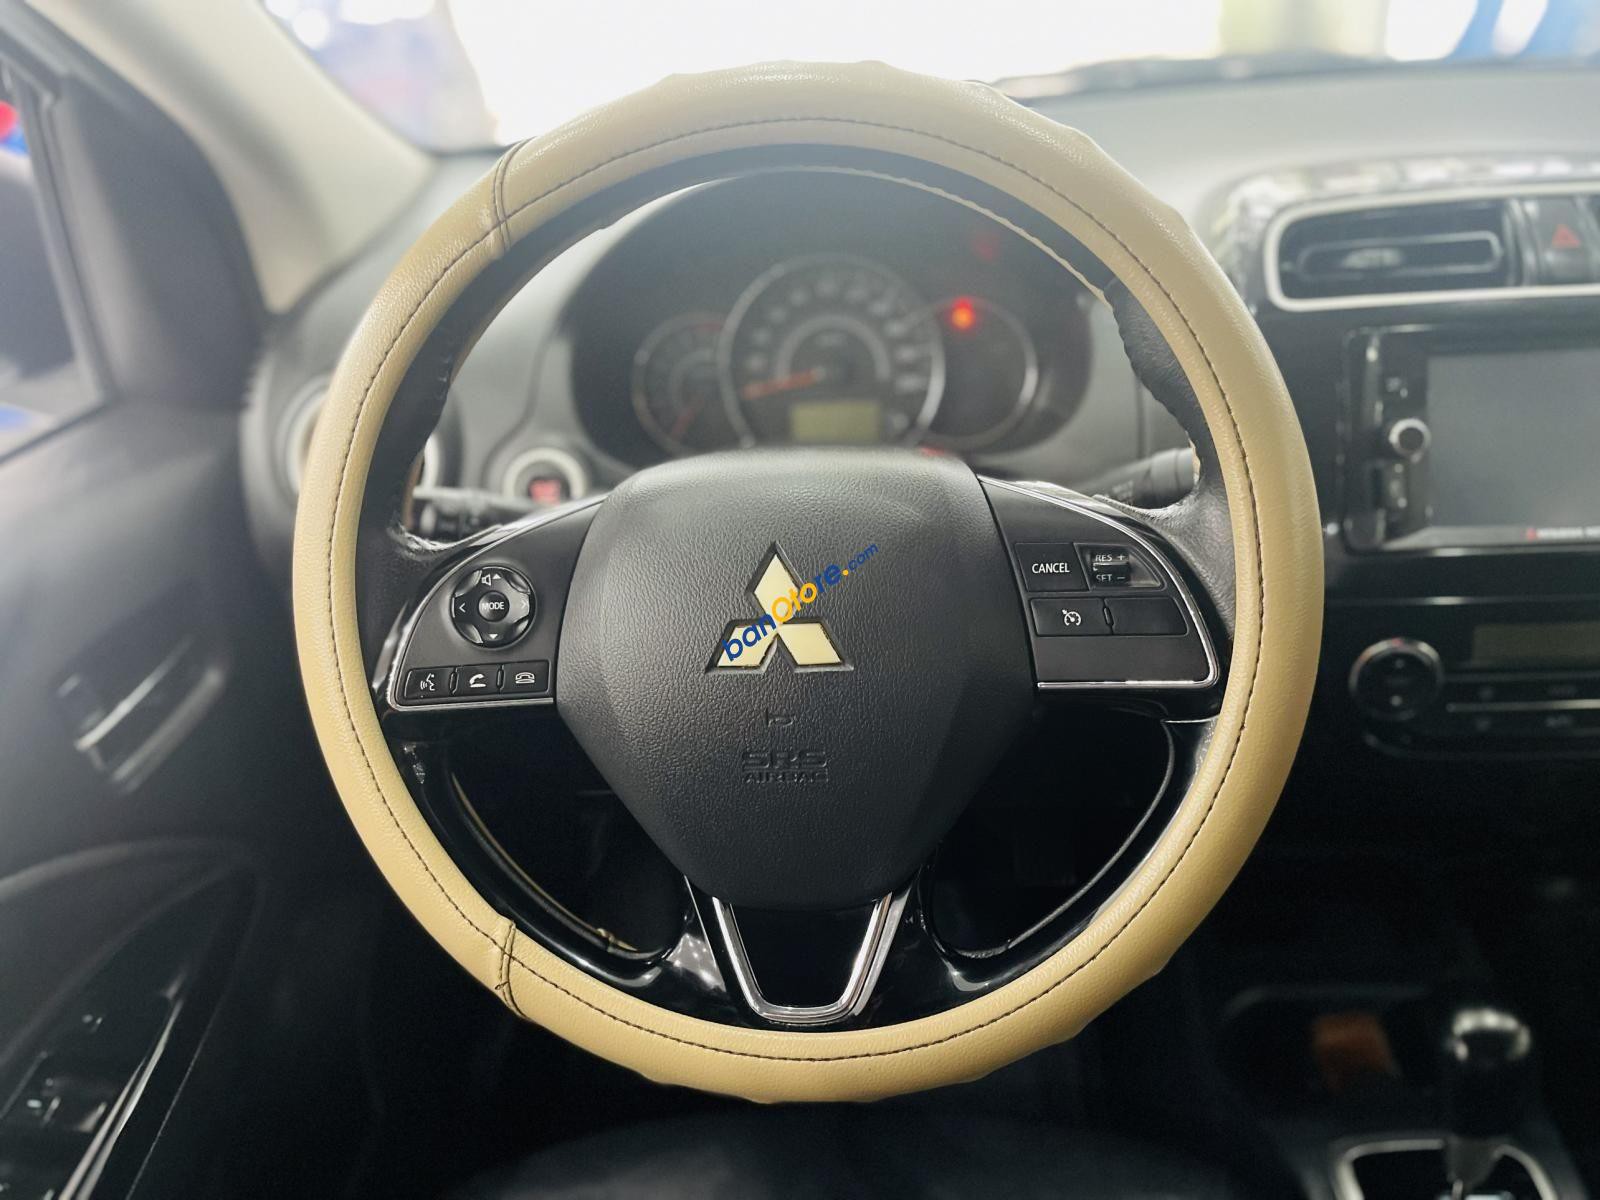 Mitsubishi Attrage 2019 - Odo 10 vạn km, giá 328 triệu đồng